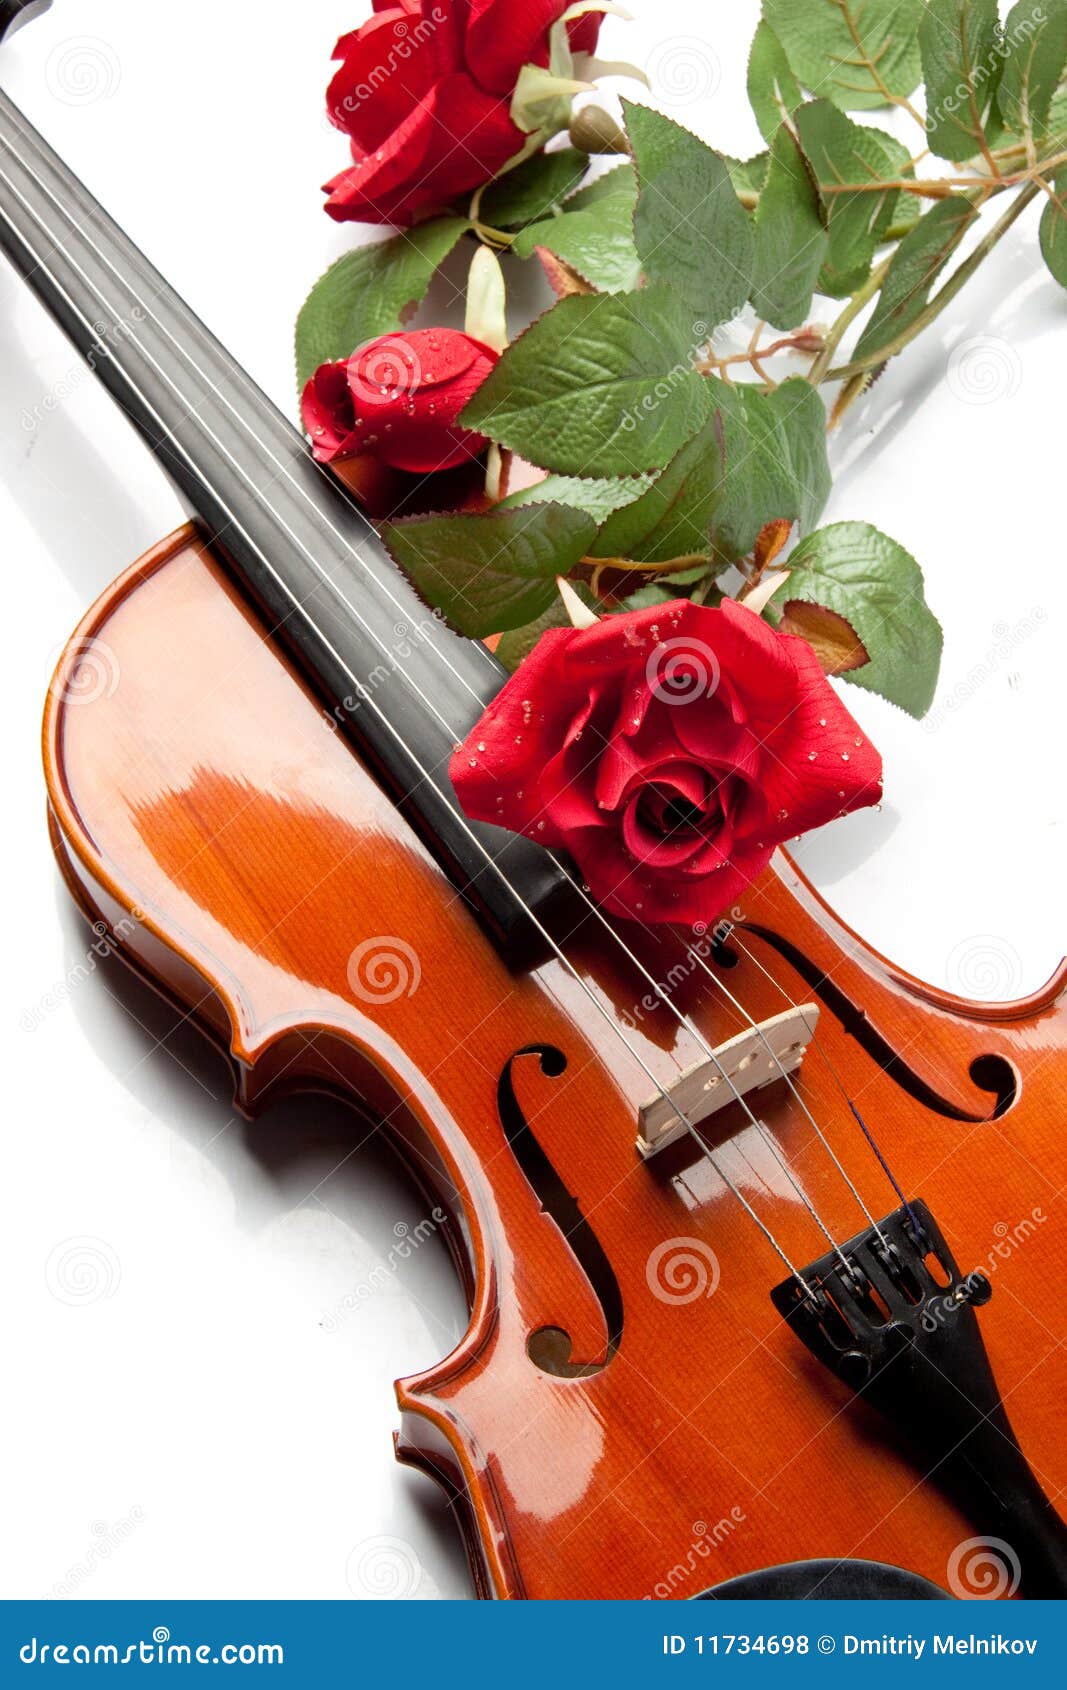 Violin And Rose Royalty Free Stock Photos - Image: 11734698